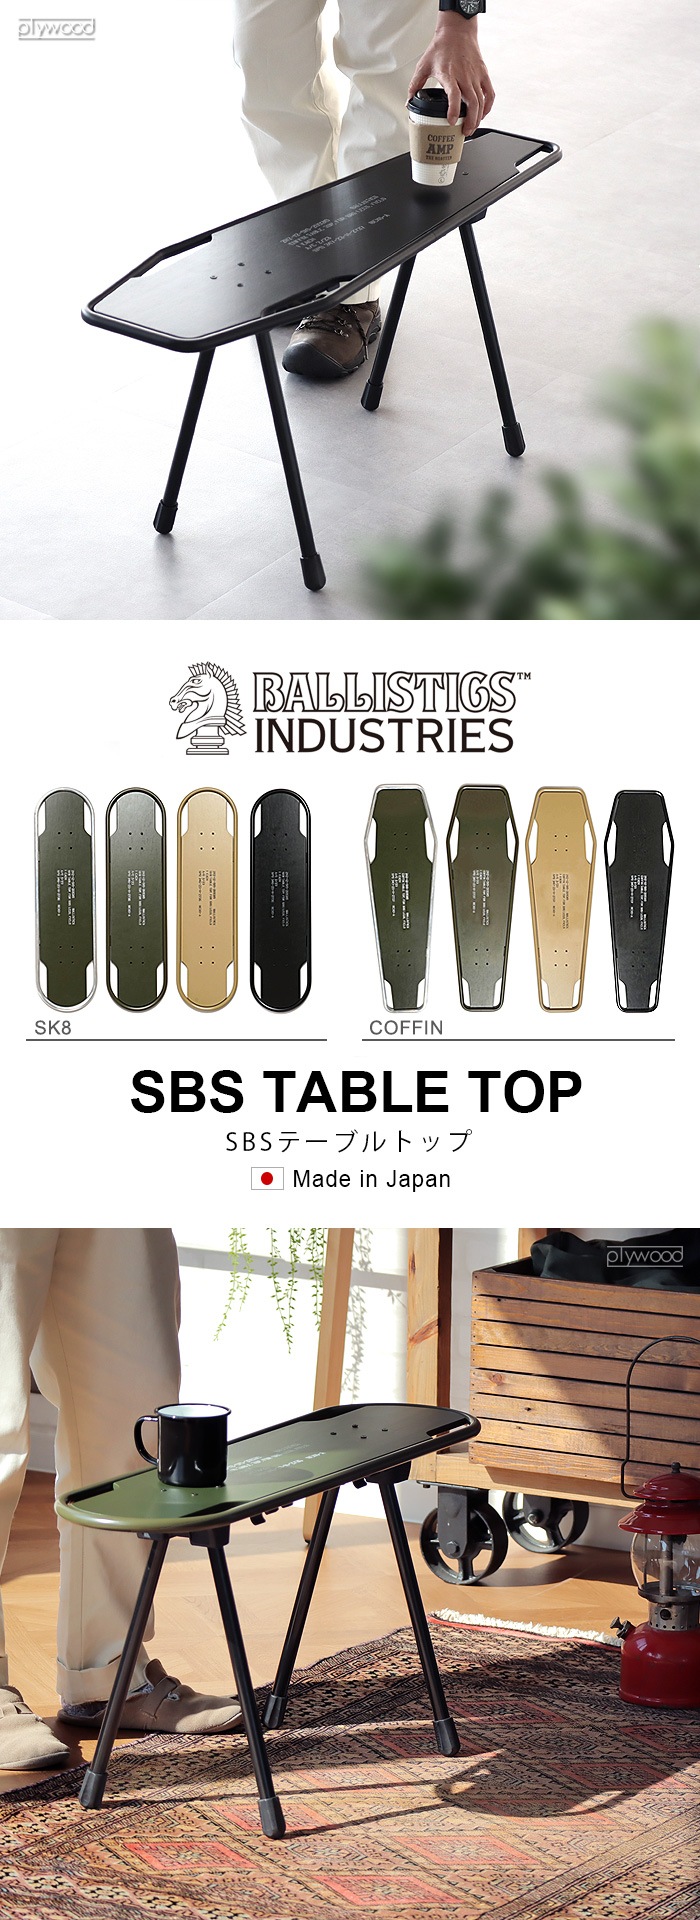 BALLISTICS SBS TABLE TOP COFFIN BAA-2310 [脚別売り] | 送料無料 ...